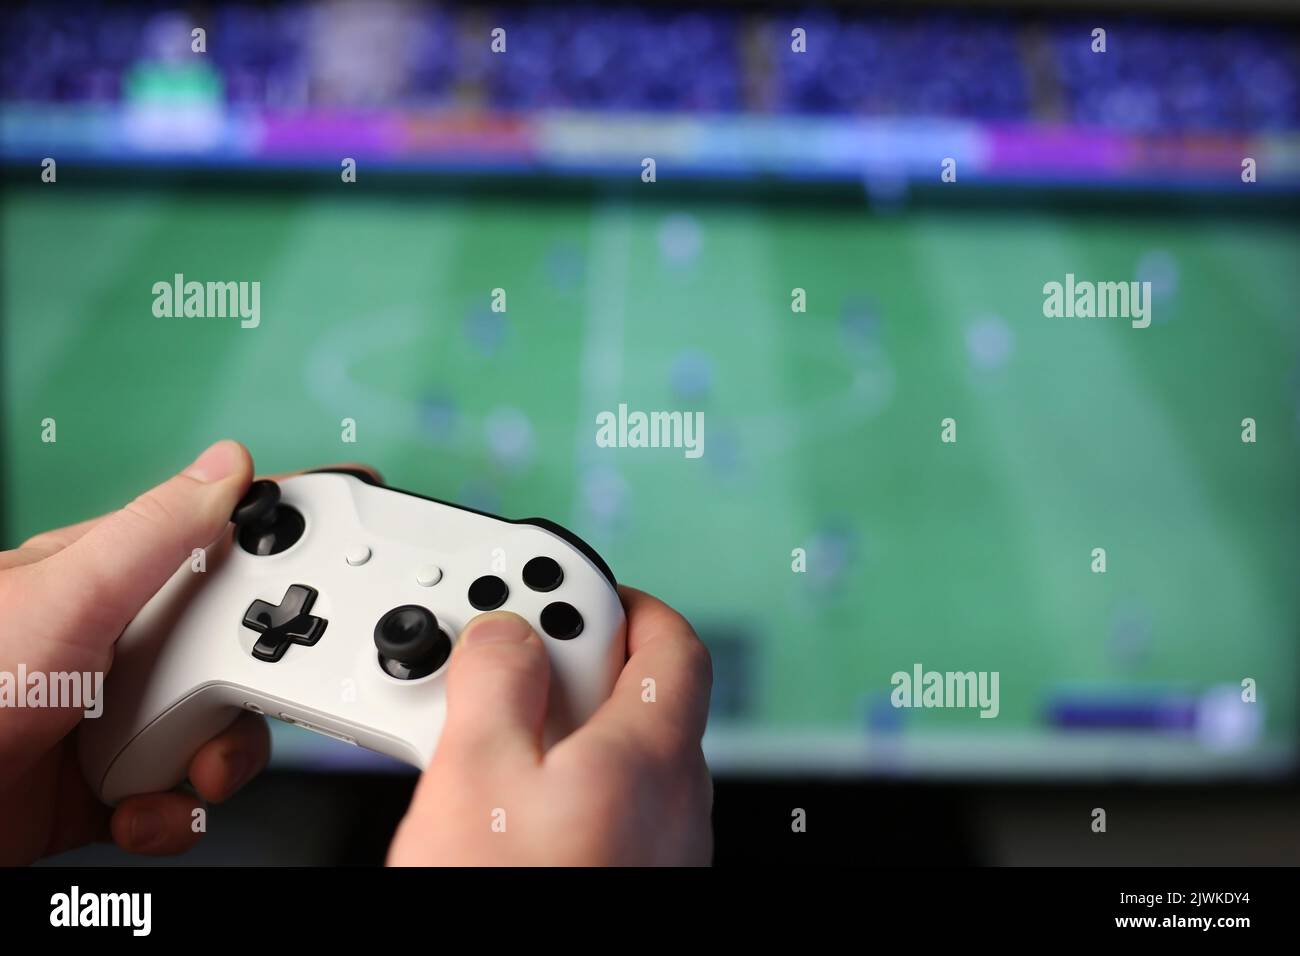 Plays football on TV, holding white gamepad Stock Photo